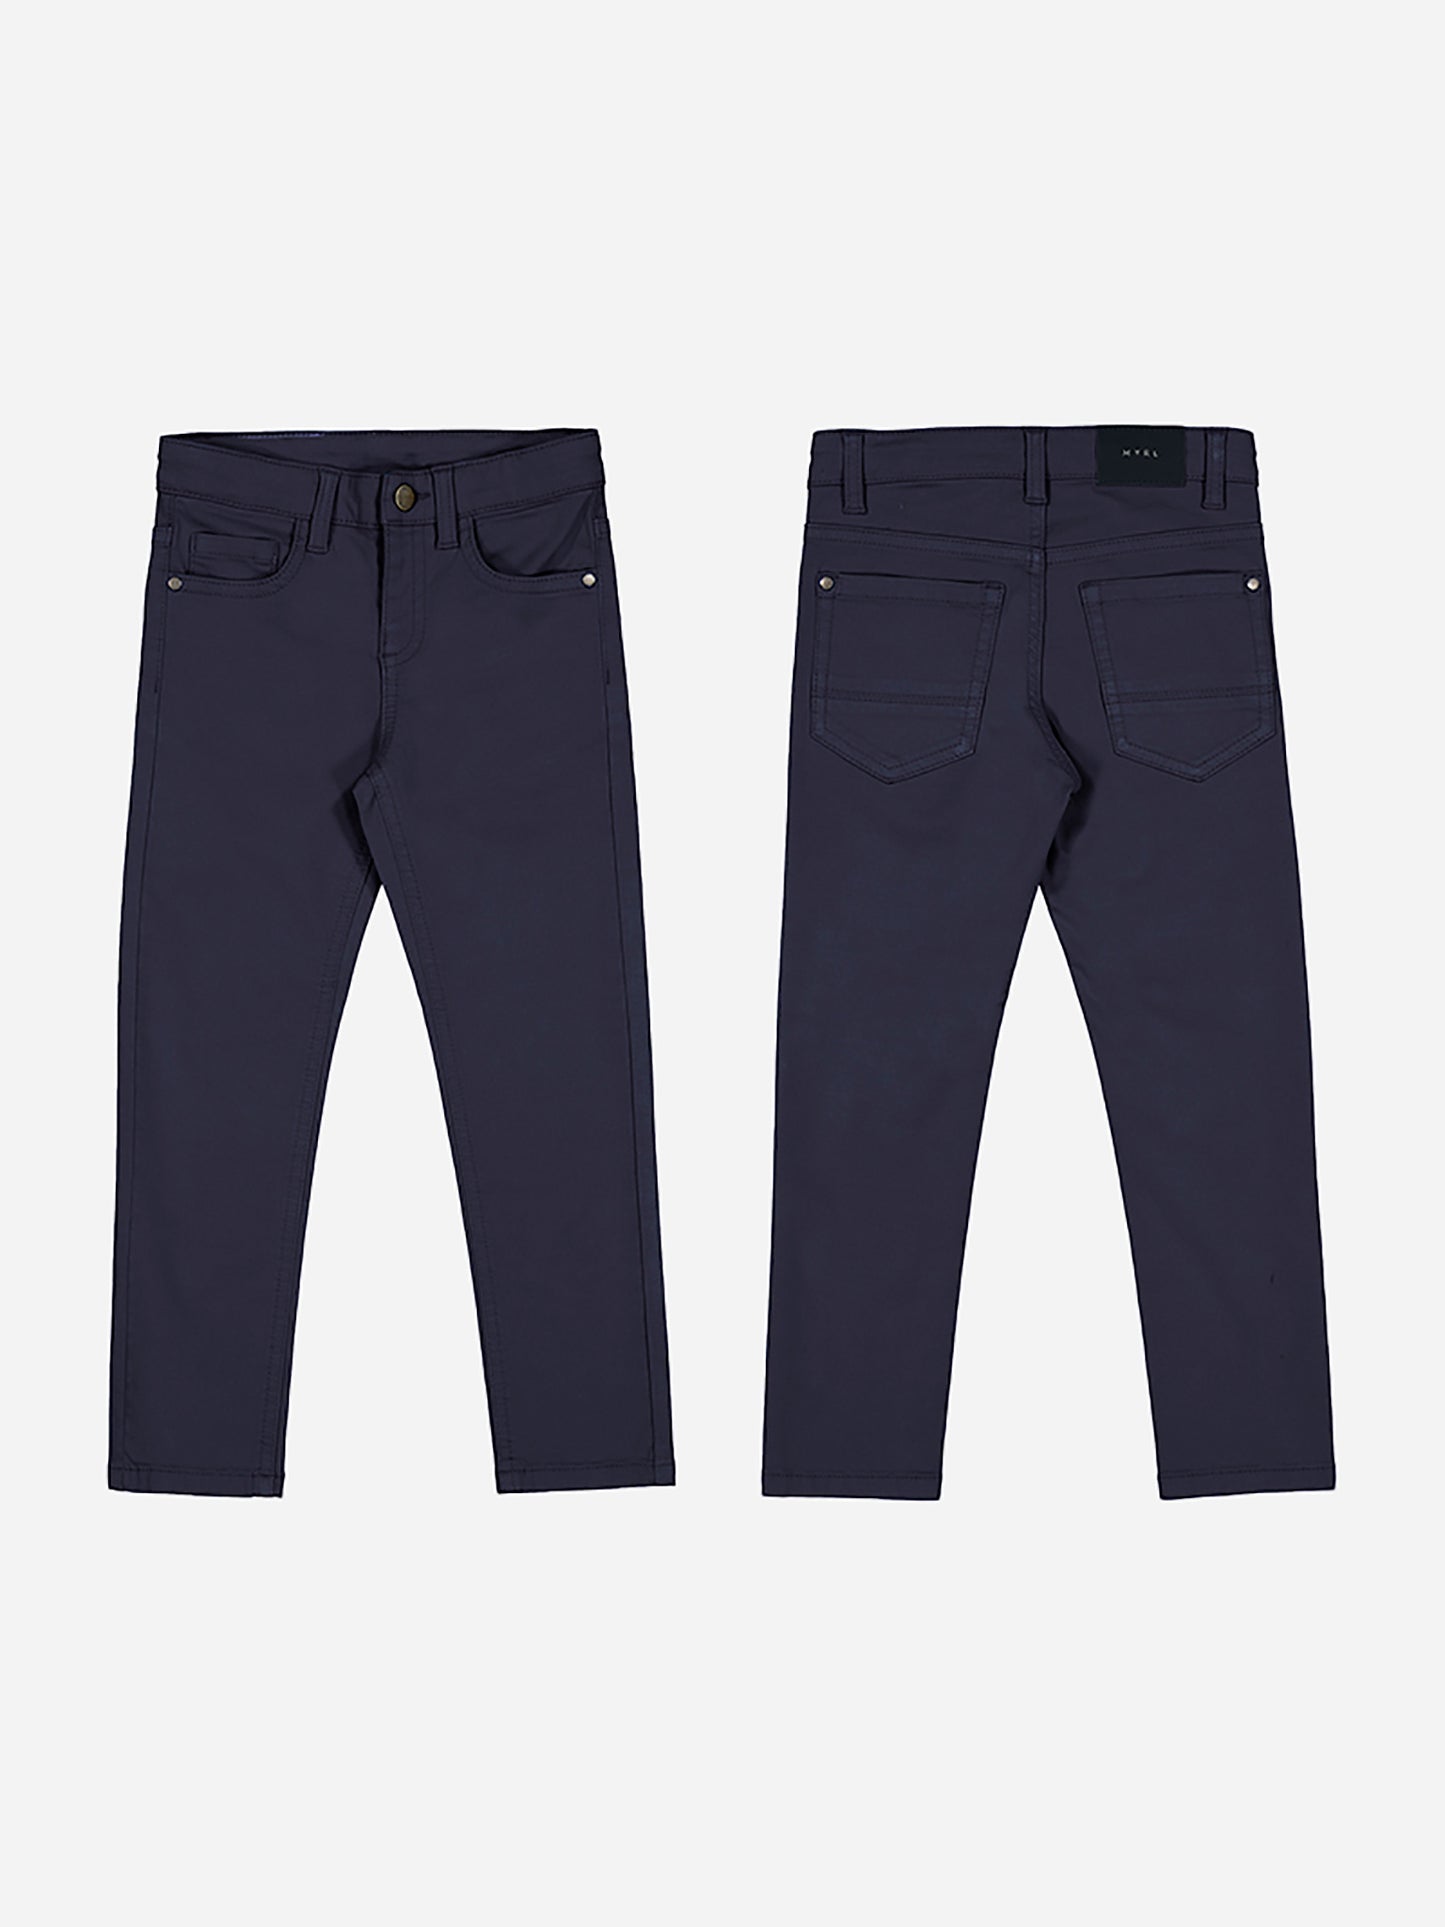 Mayoral Boys' 5-Pocket Slim Fit Basic Pant